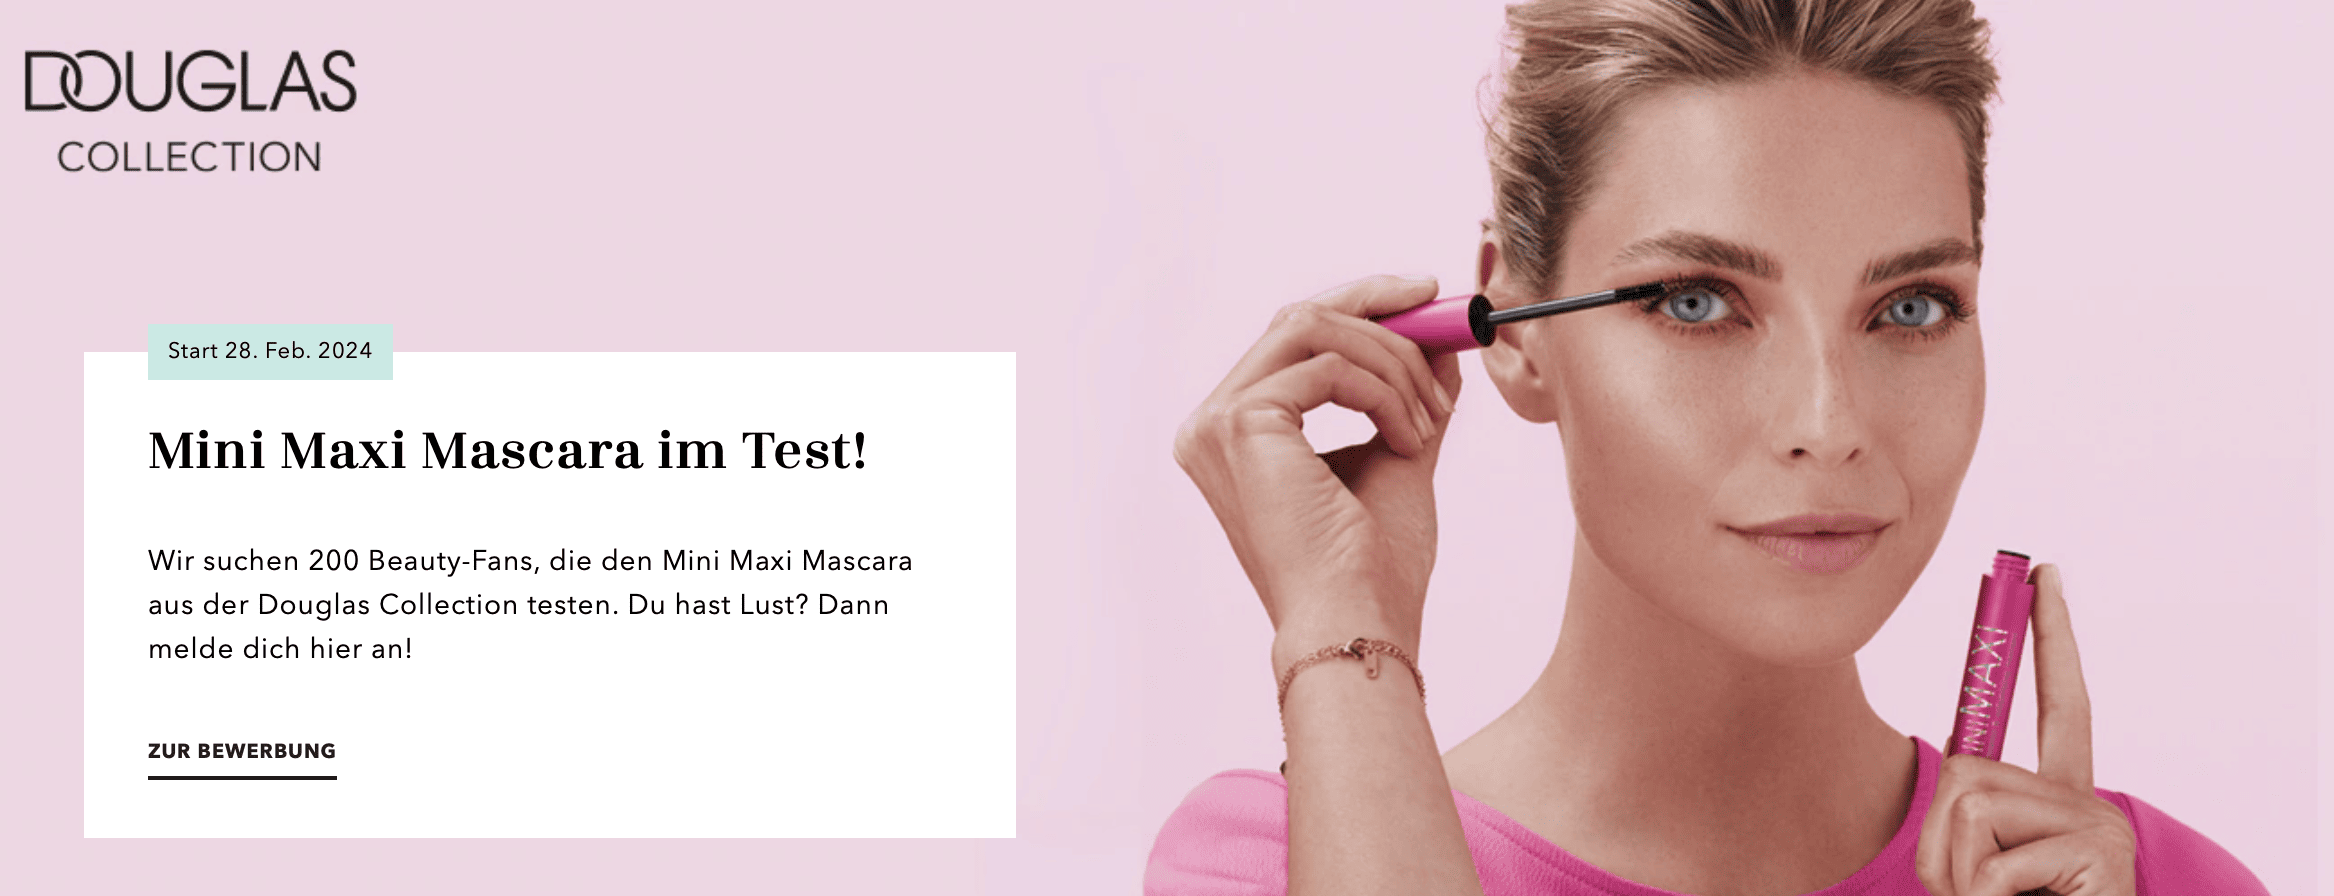 case_Douglas - 200 Produkttester für den Mini Maxi Mascara gesucht 